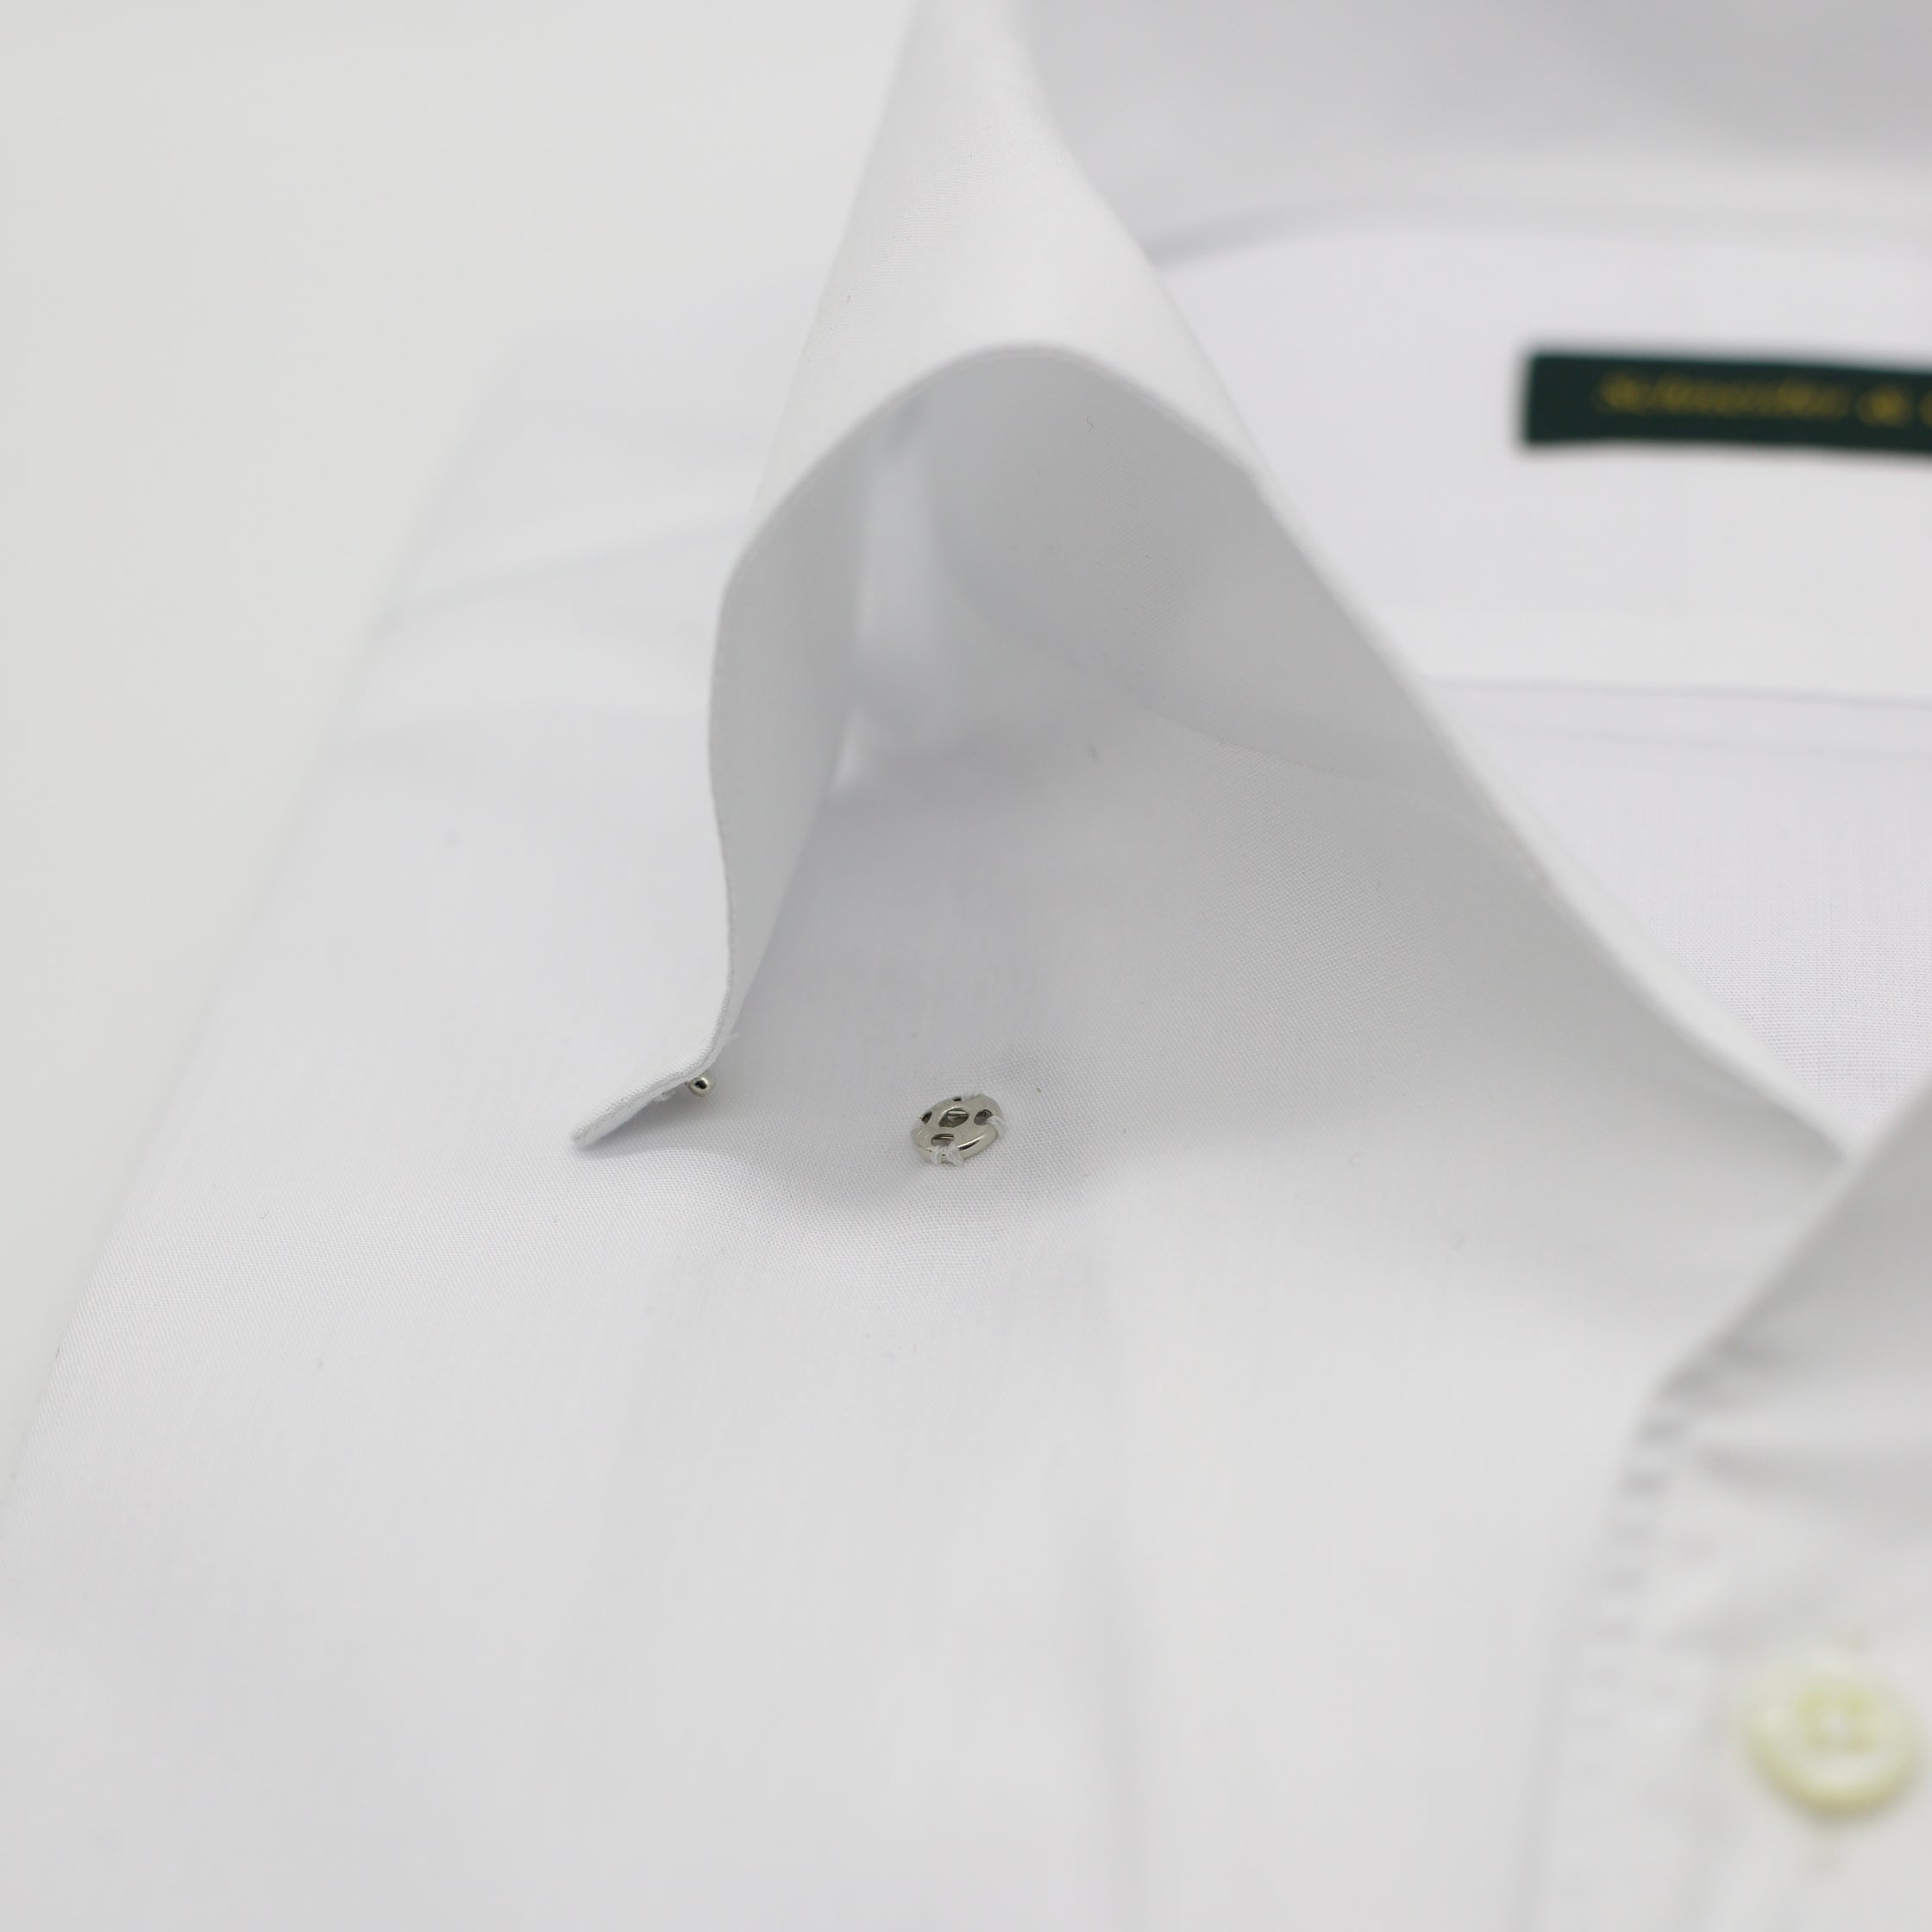 One-piece Collar Shirt - White